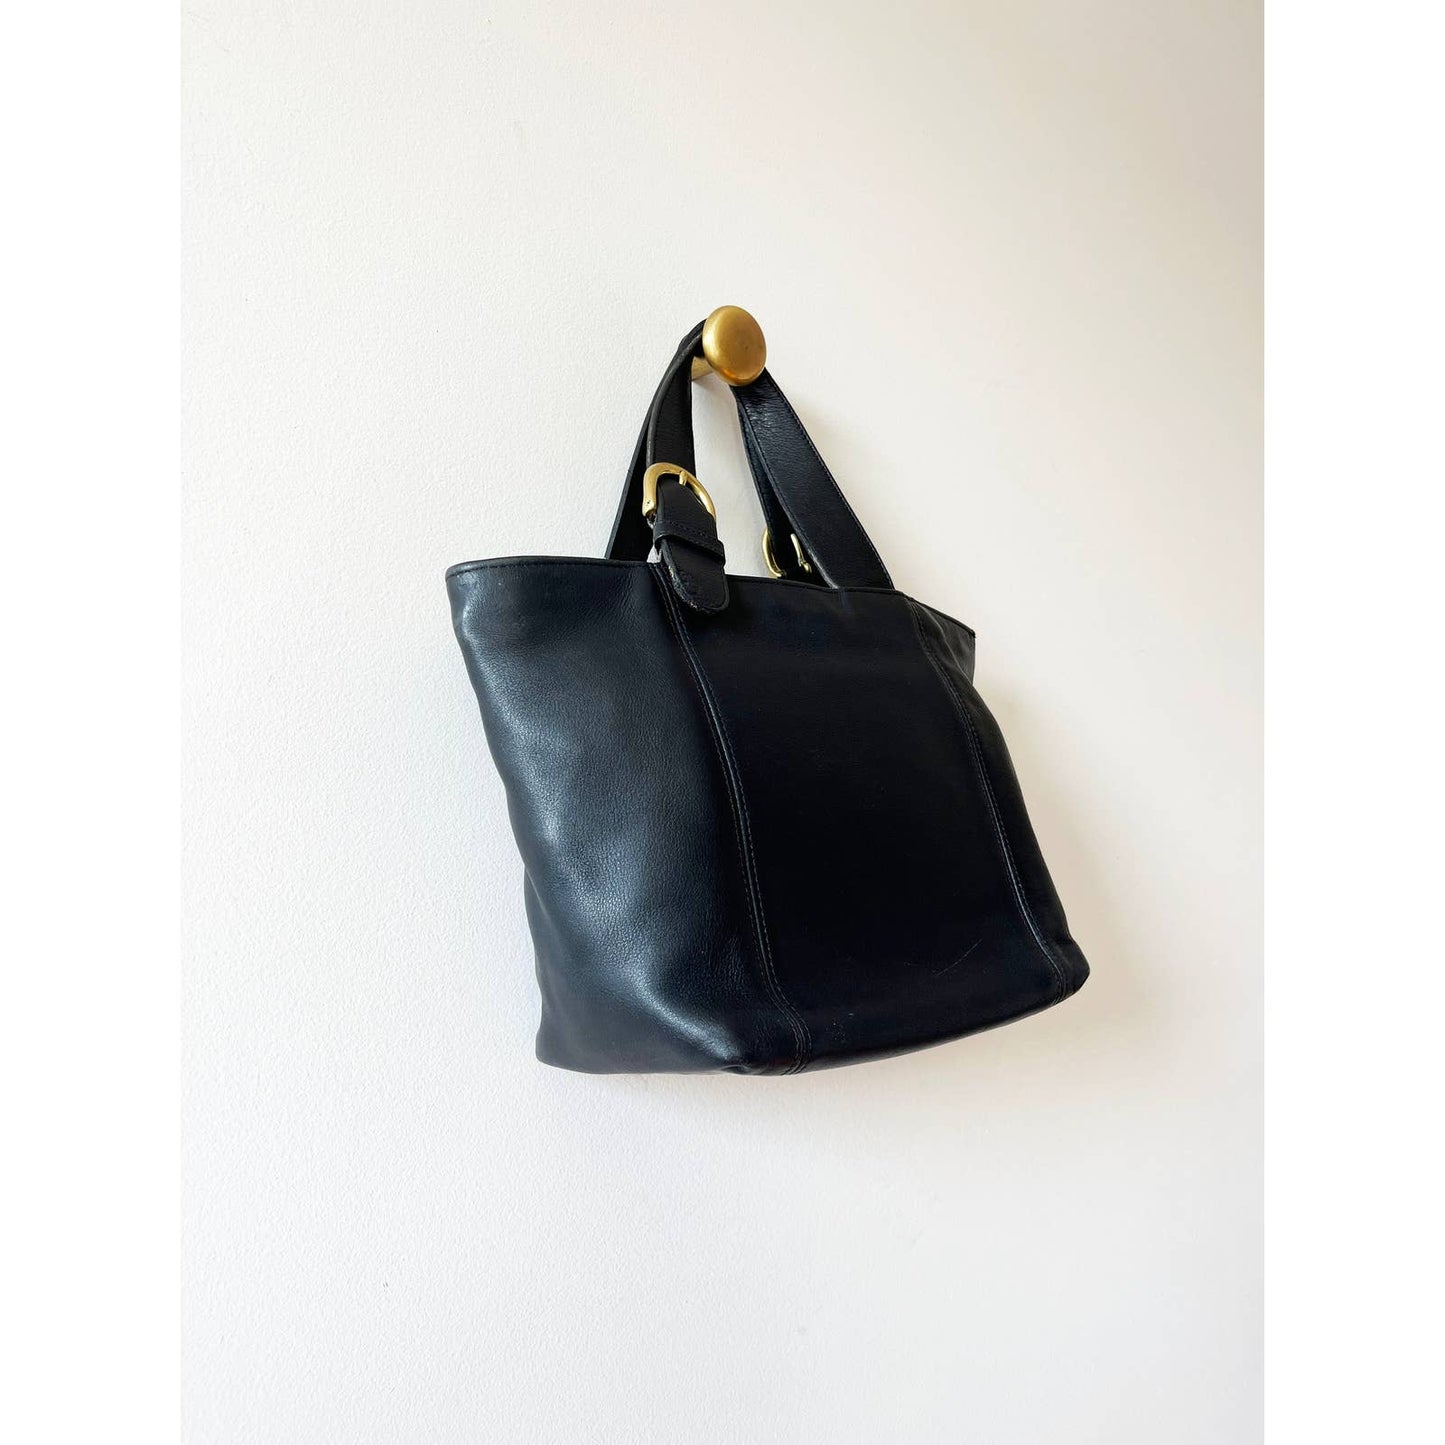 Vintage Classic Black Coach Handbag